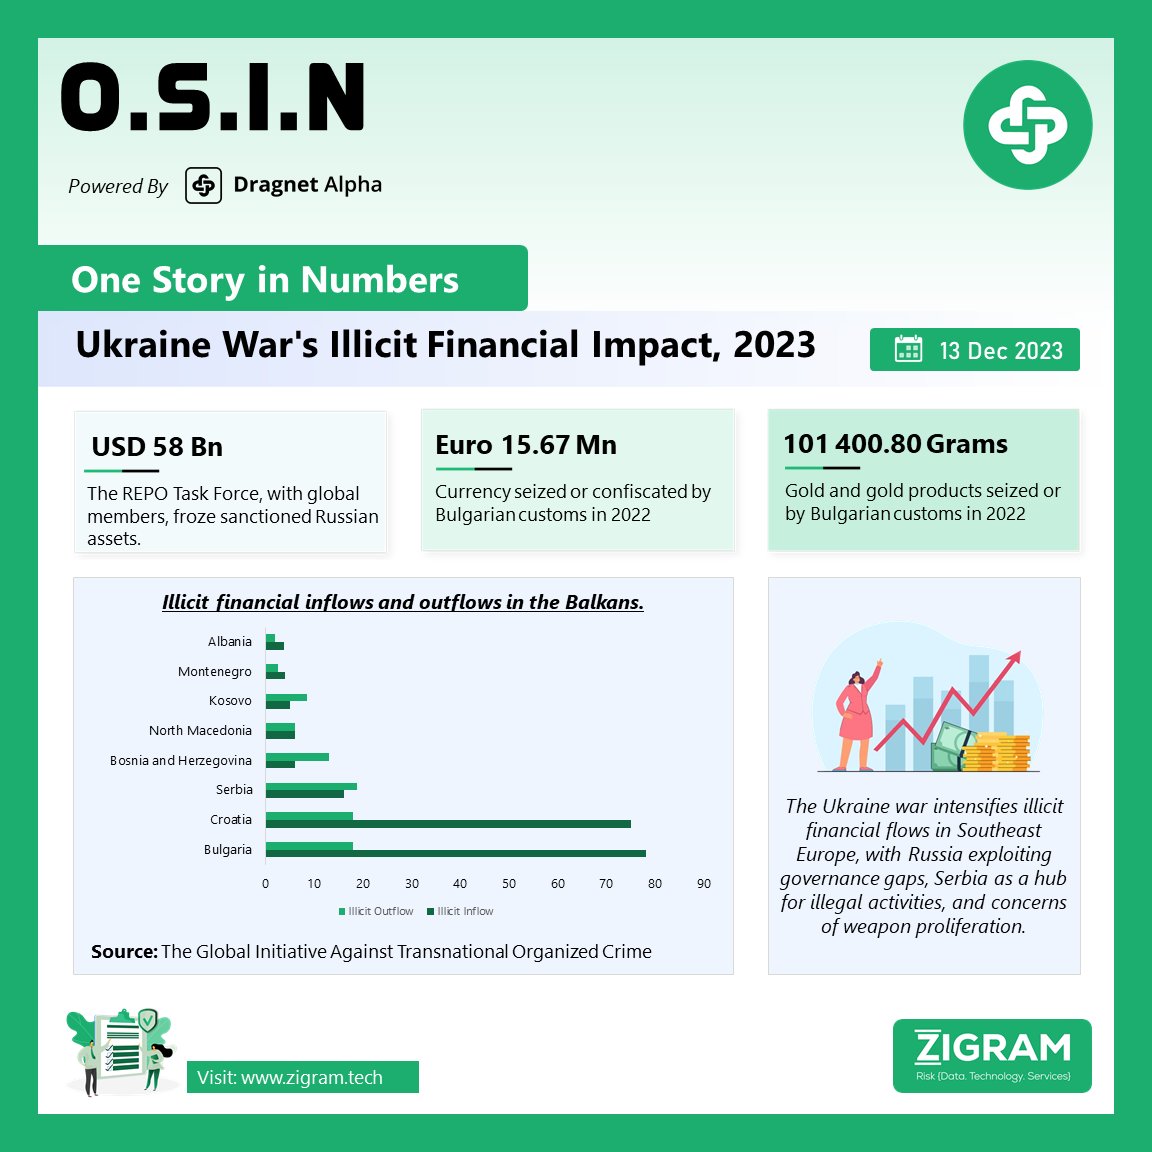 OSIN |  Ukraine War's Illicit Financial Impact, 2023
Powered By- Dragnet Alpha

To read more: zurl.co/1GMz
Explore the product's full scope:  zurl.co/bkMo

#UkraineWarImpact #IllicitFinancialFlows #BalkanRegionRisk #KleptocracyConcerns   #BlackMarketRisks